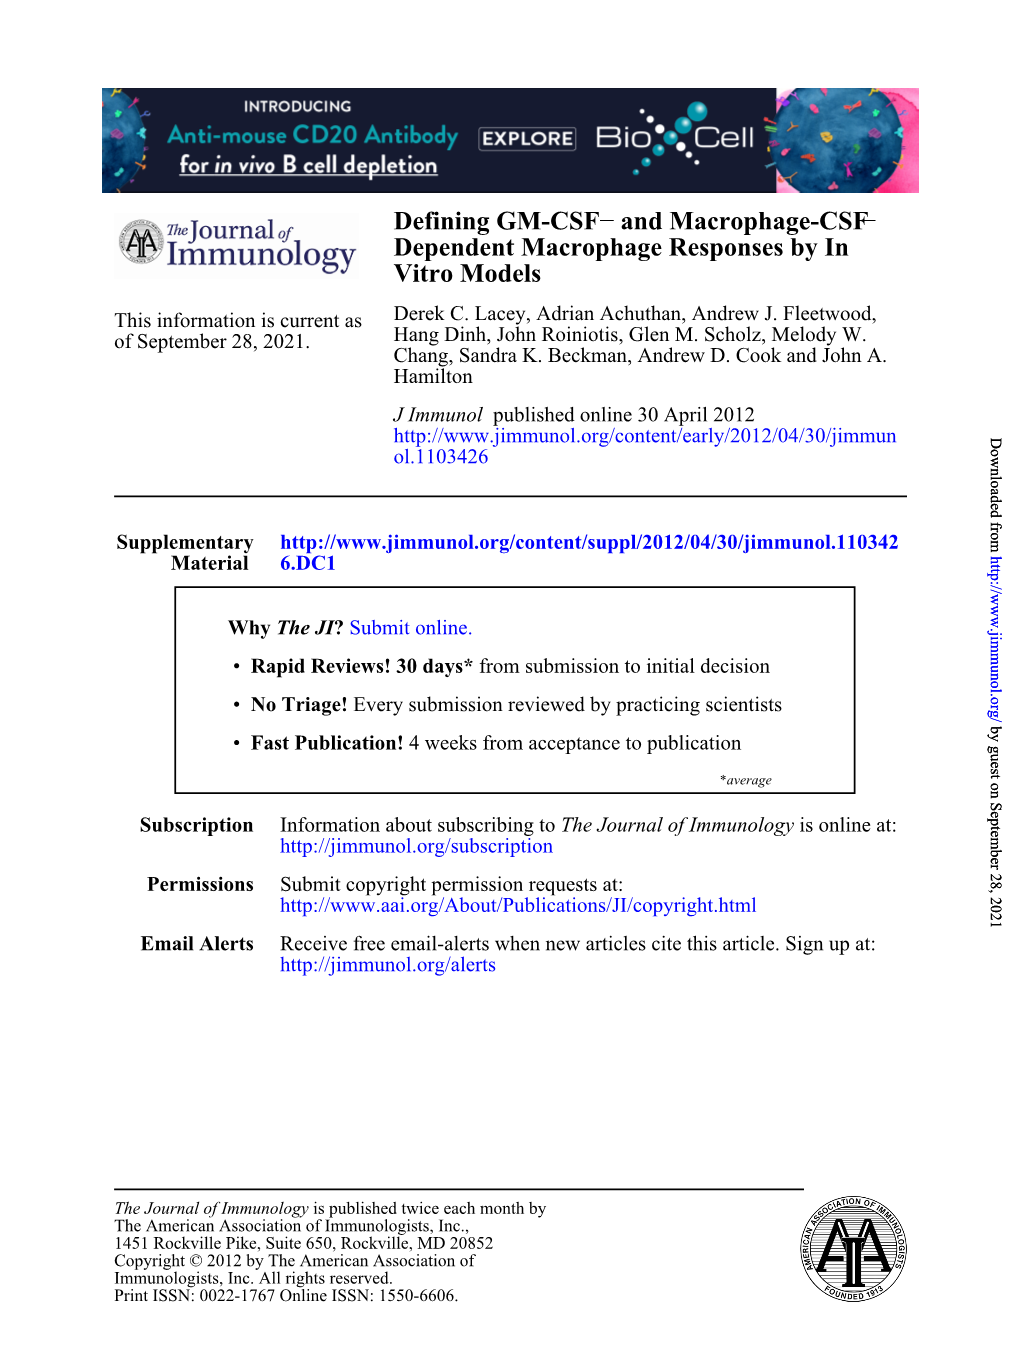 And Macrophage-CSF − Defining GM-CSF